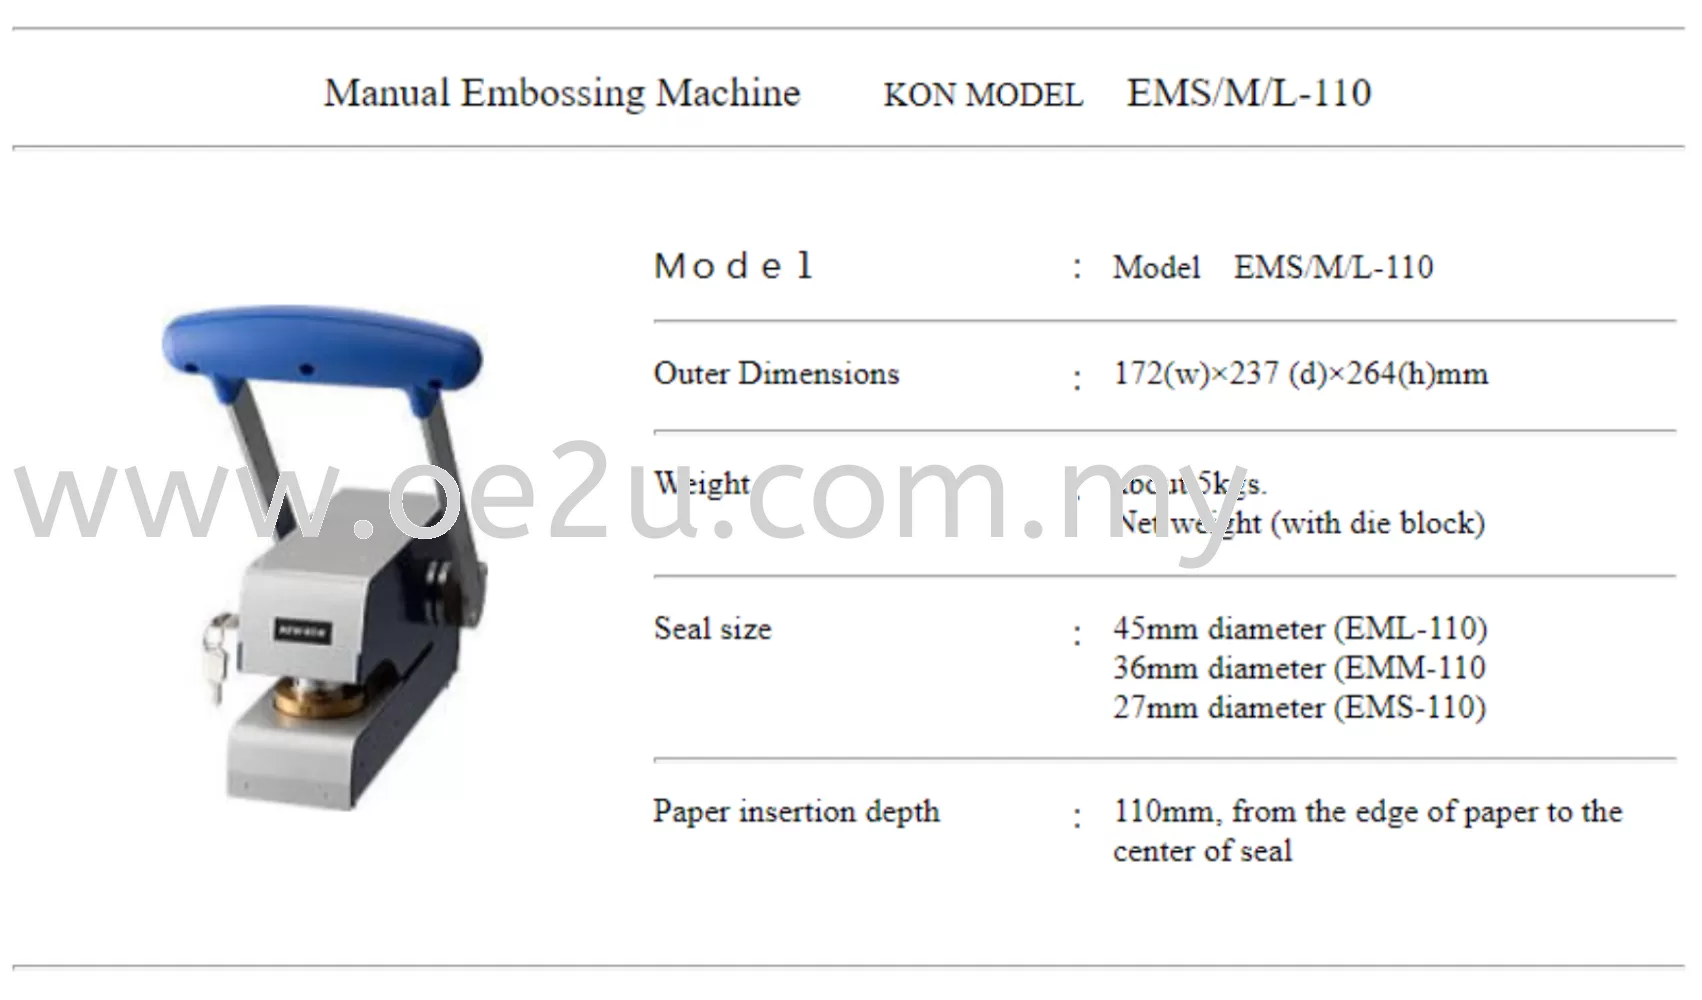 NEW KON EMM-110 Manual Embossing Machine (36mm Diameter of Impression Surface)